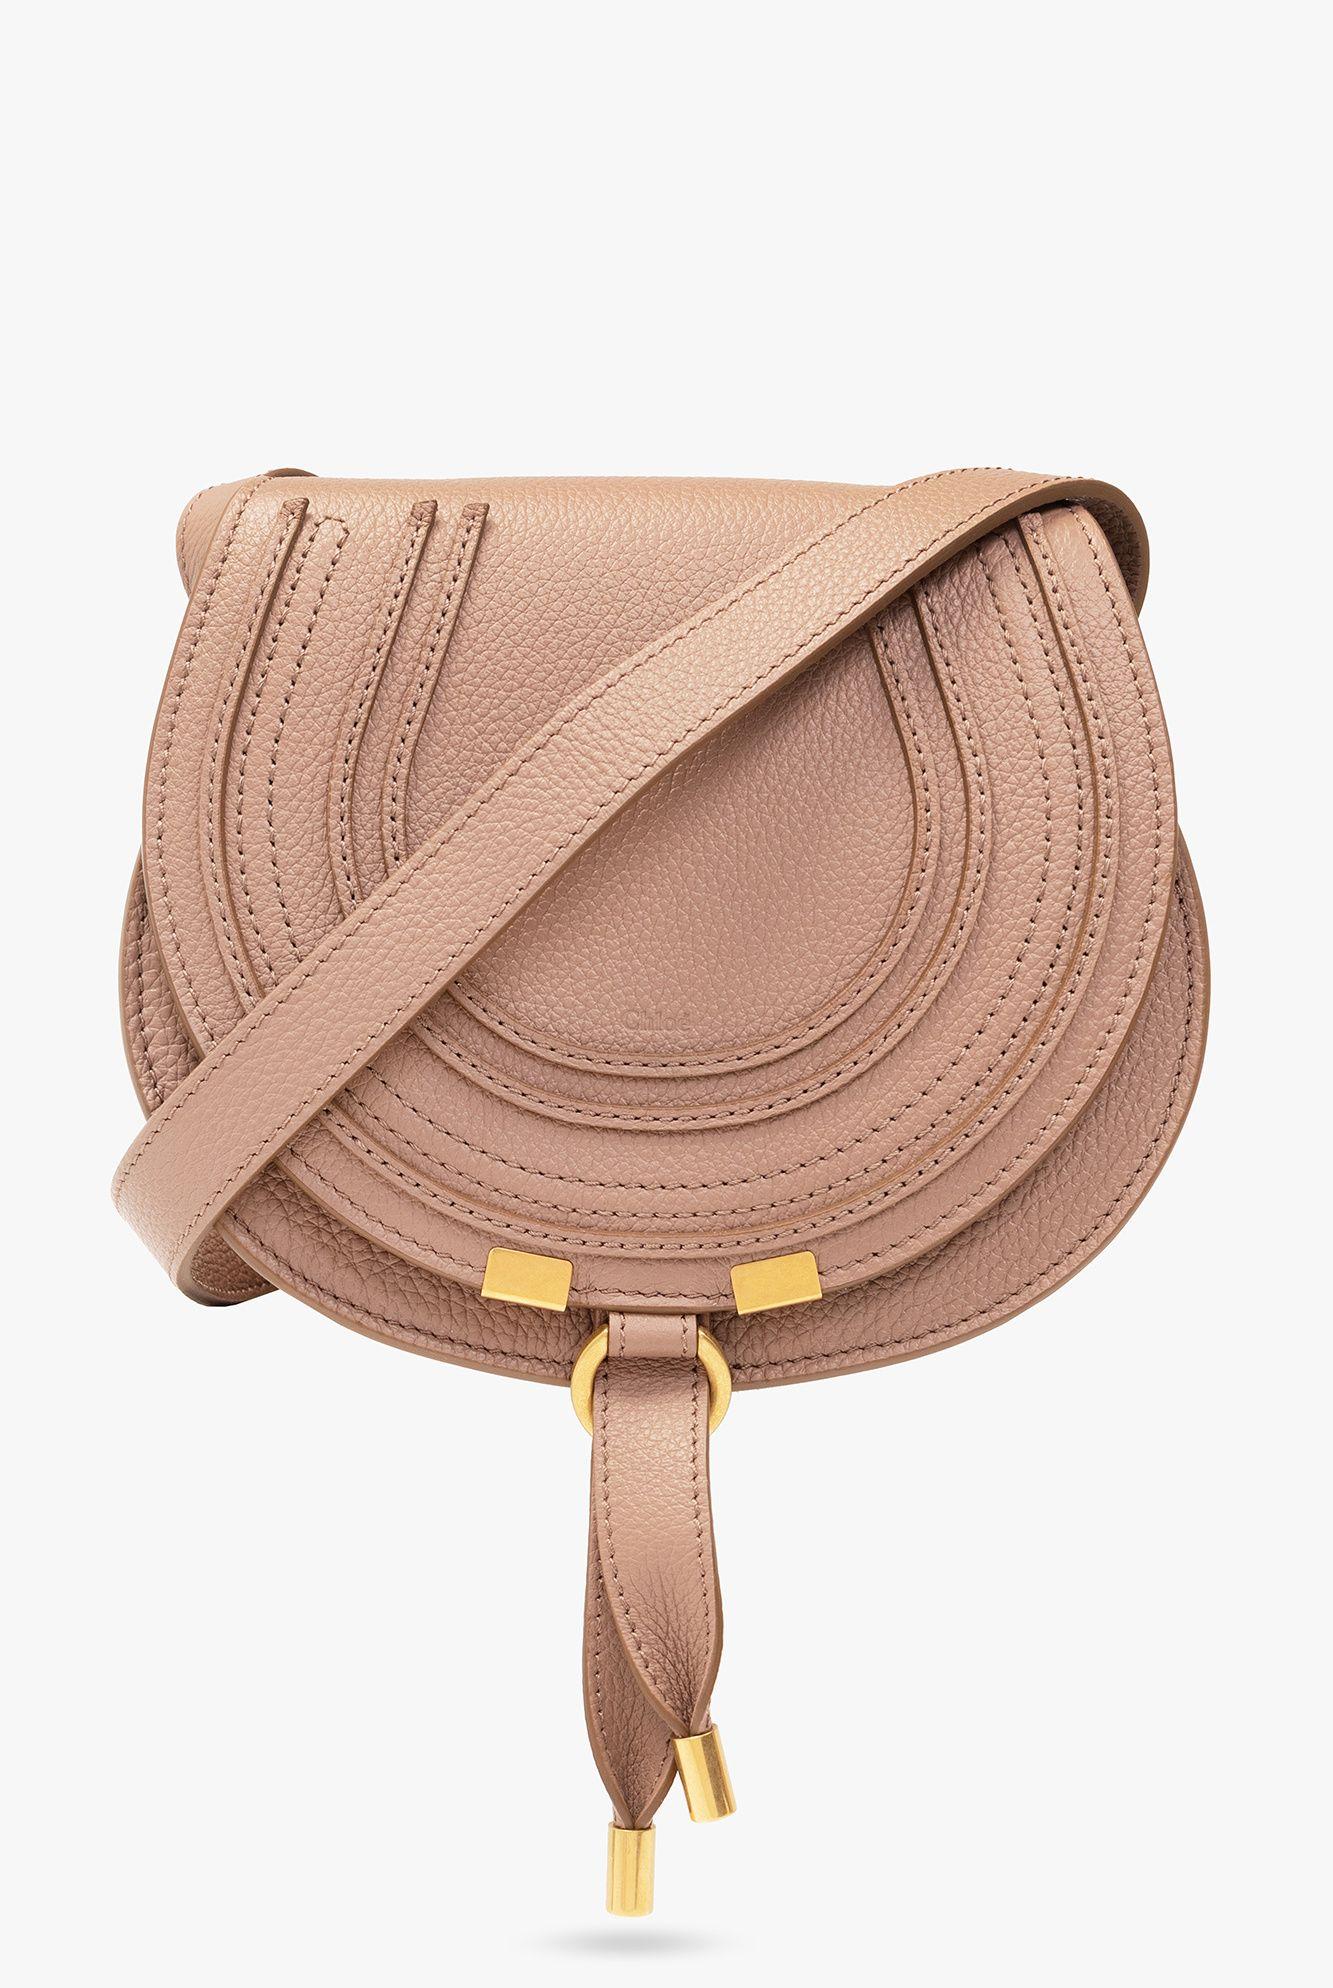 Chloé Small Marcie Shoulder Bag